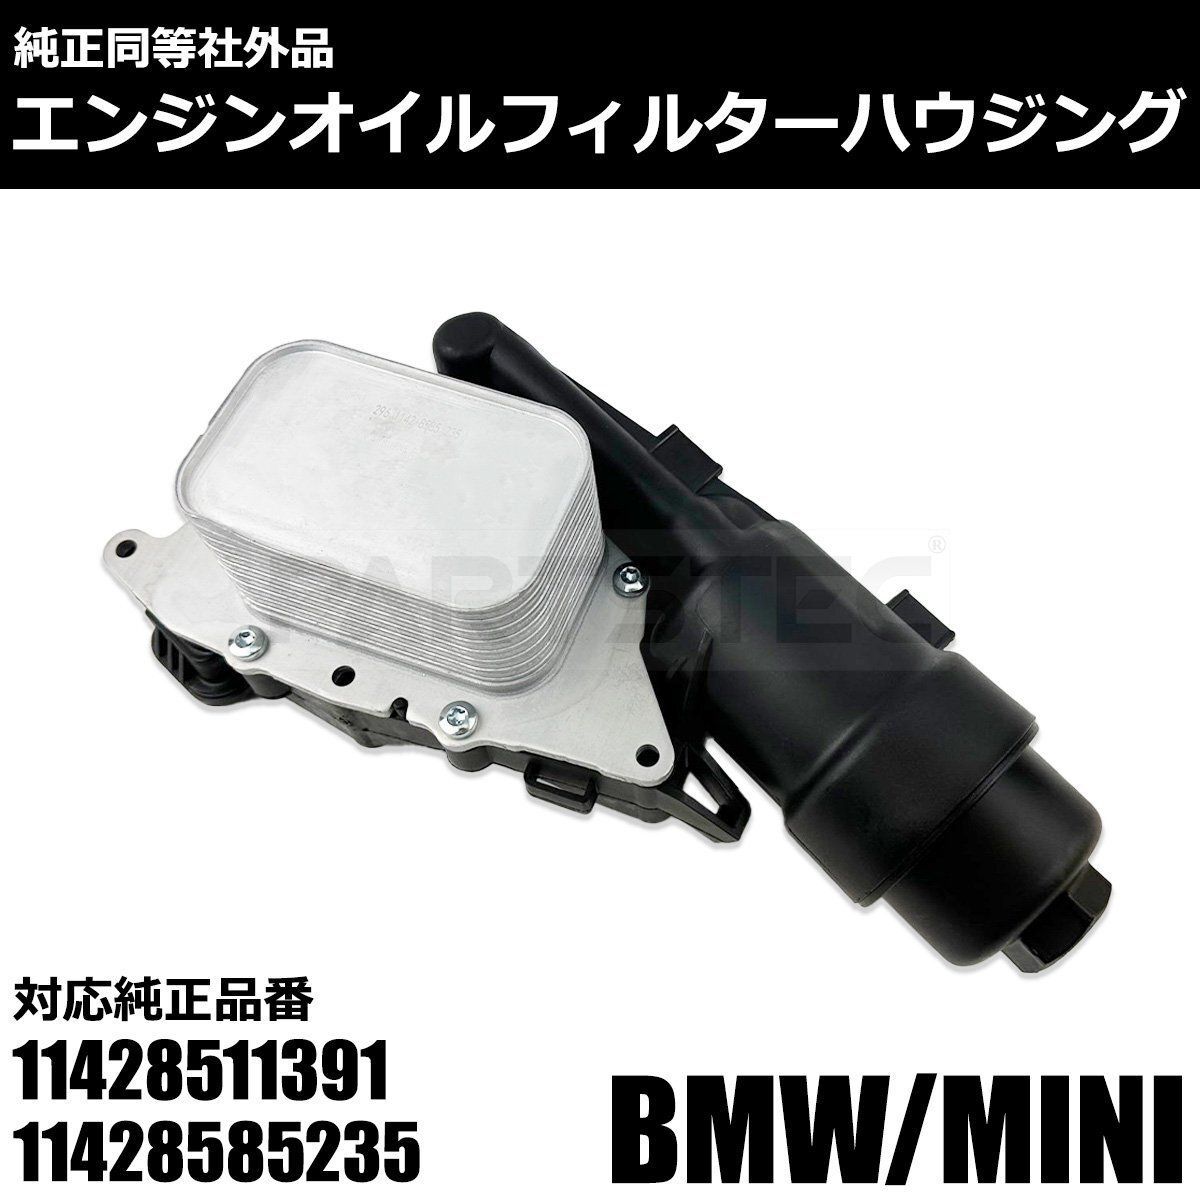 BMW MINI F54 F55 F56 F57 F60 オイルフィルター 11428570590 11428575210 手数料安い - パーツ